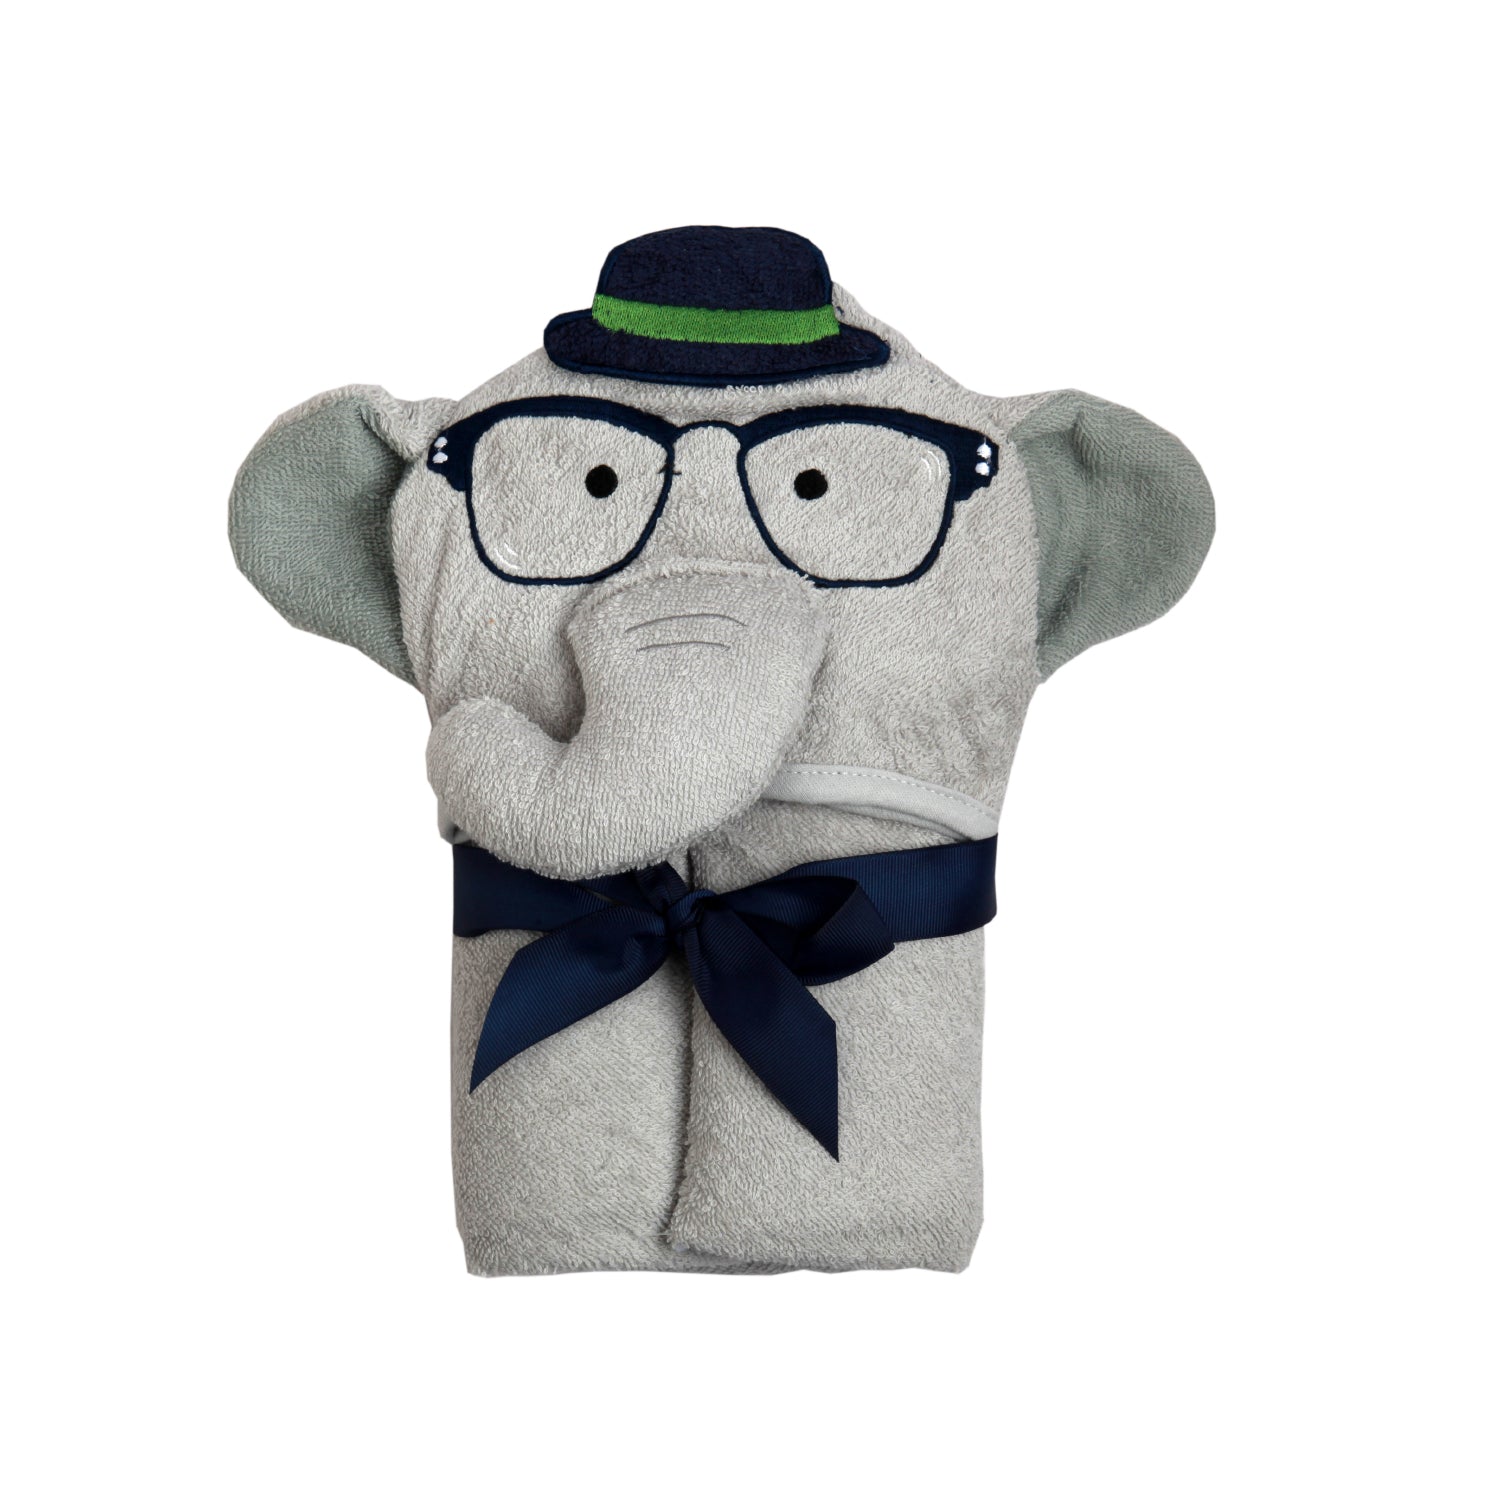 Mr. Elephant Grey Hooded Towel - Baby Moo